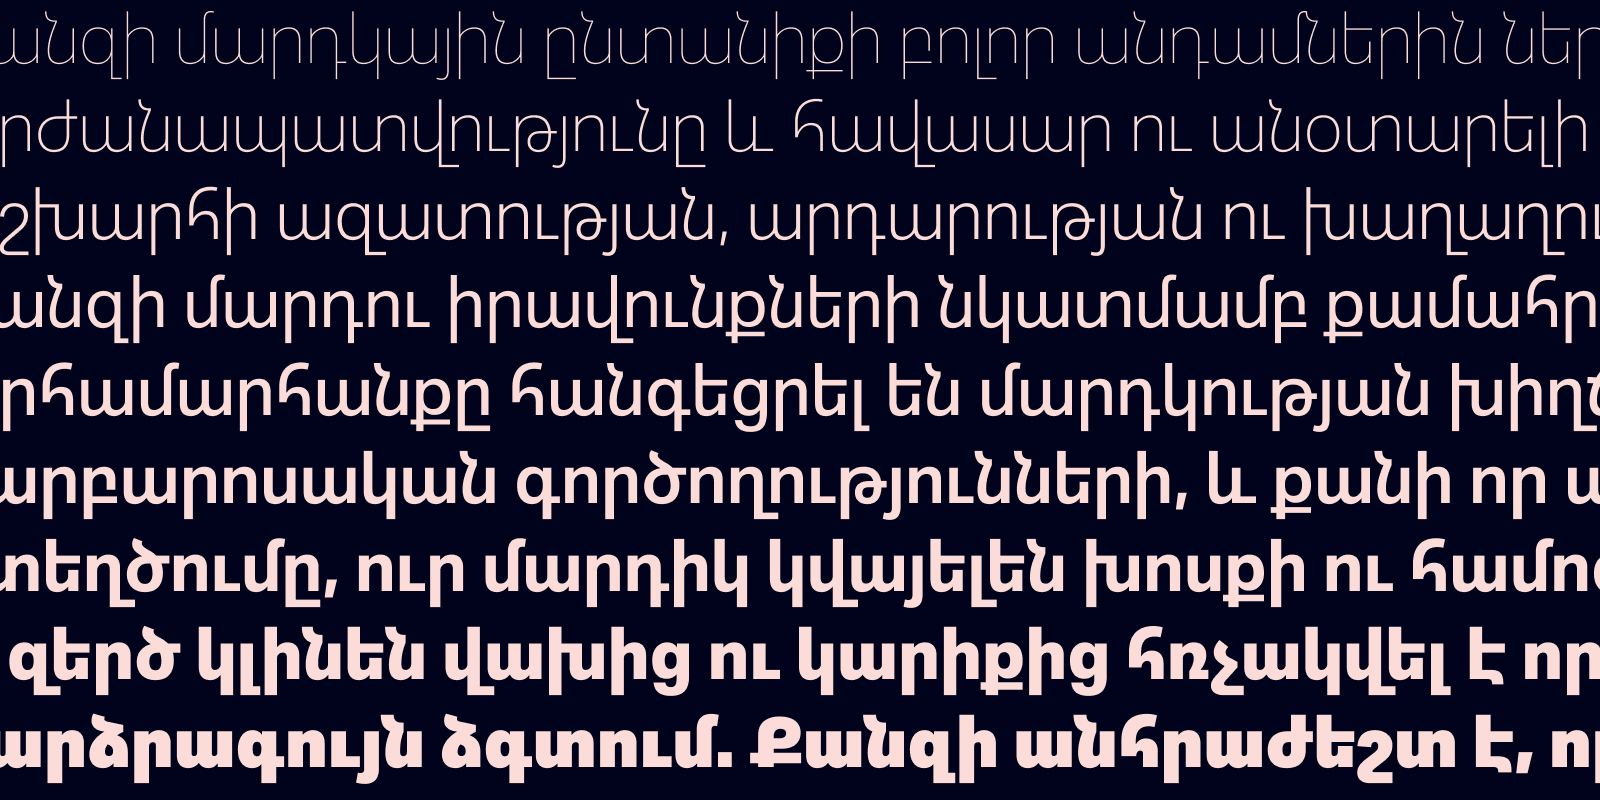 Card displaying Aktiv Grotesk Armenian typeface in various styles